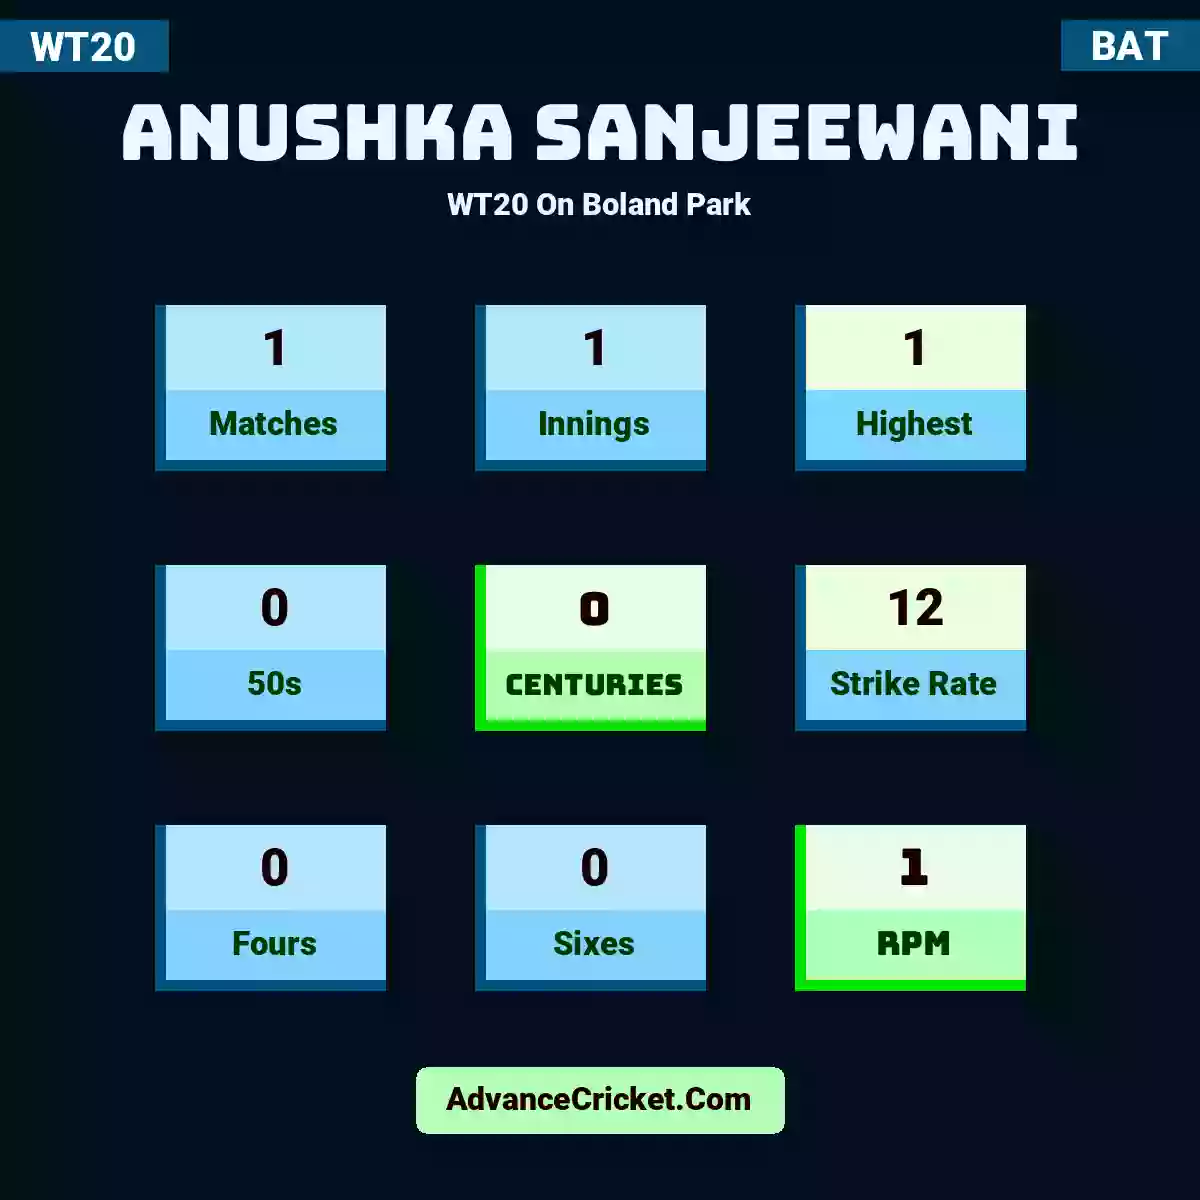 Anushka Sanjeewani WT20  On Boland Park, Anushka Sanjeewani played 1 matches, scored 1 runs as highest, 0 half-centuries, and 0 centuries, with a strike rate of 12. A.Sanjeewani hit 0 fours and 0 sixes, with an RPM of 1.